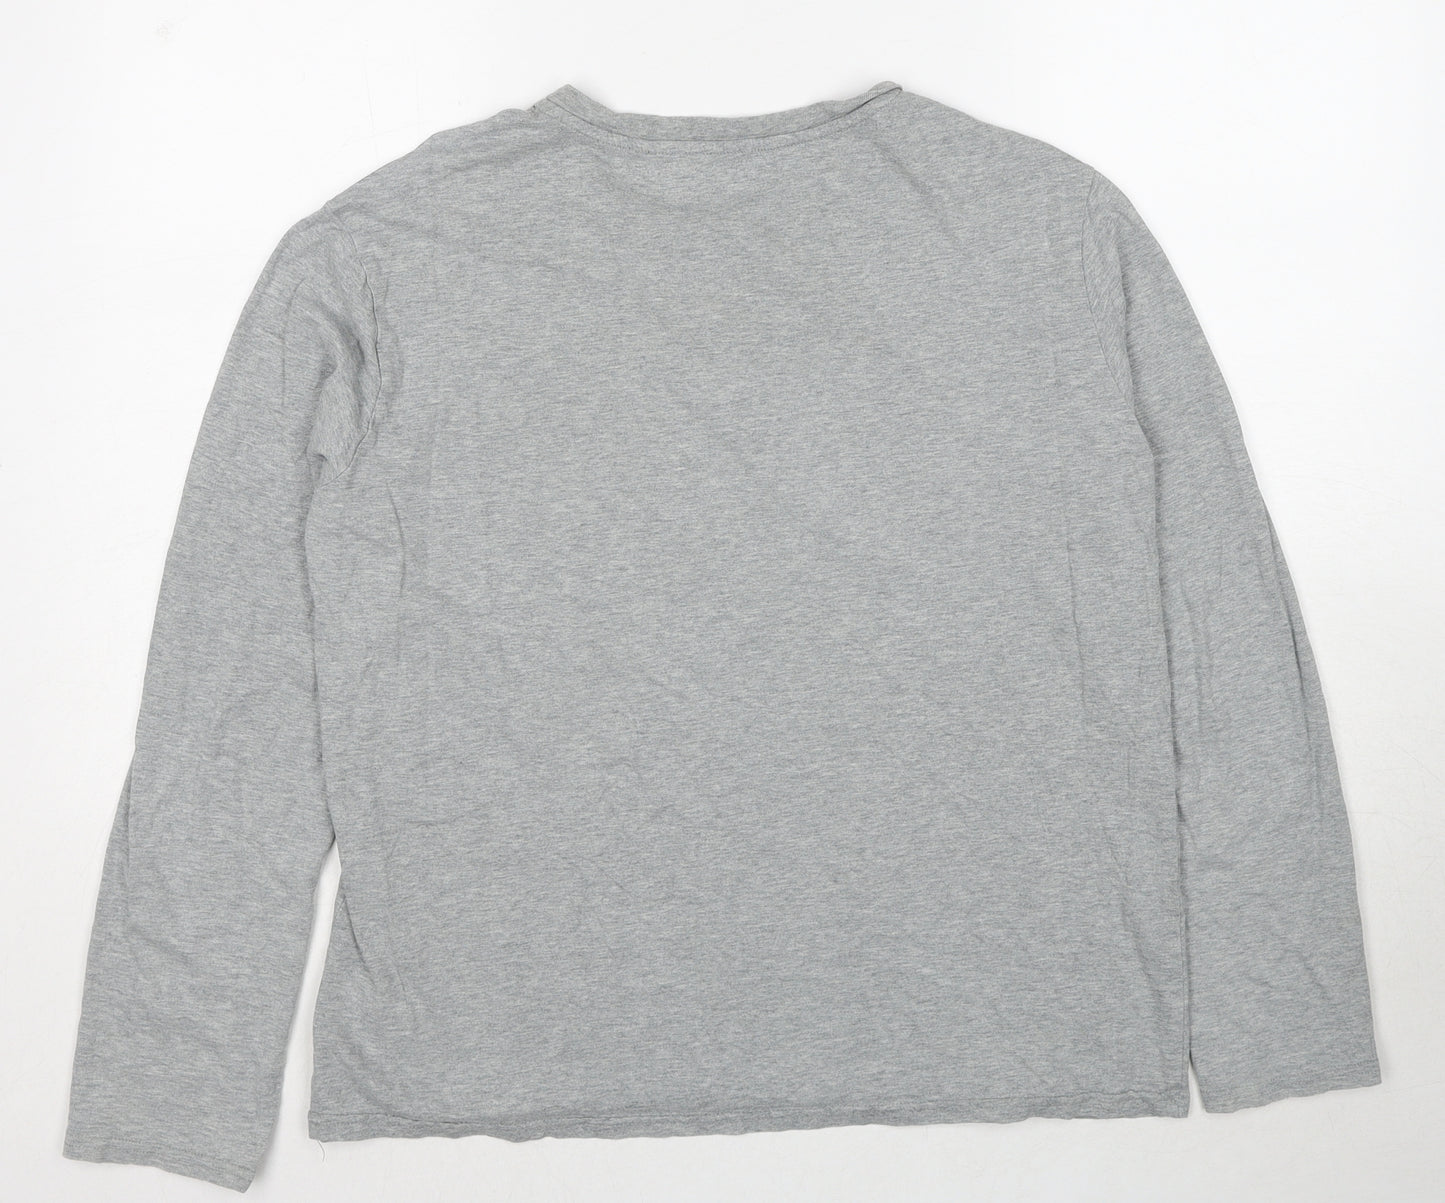 Merona Mens Grey Cotton T-Shirt Size L Crew Neck Pullover